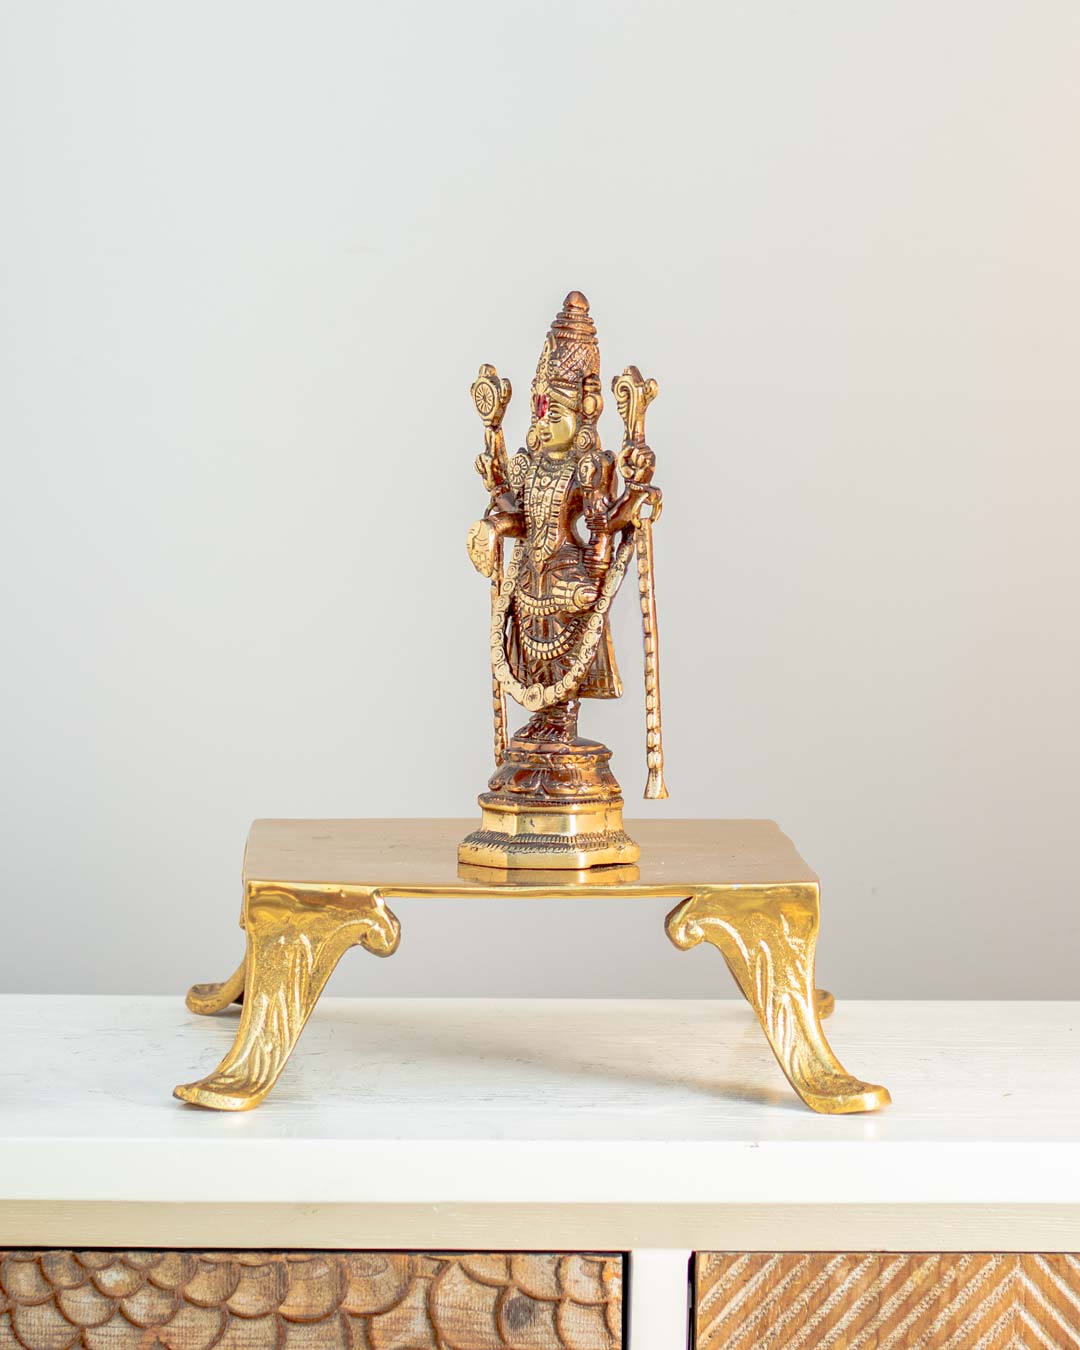 Marvelous 'Tirupati Balaji' Table Top sculpture